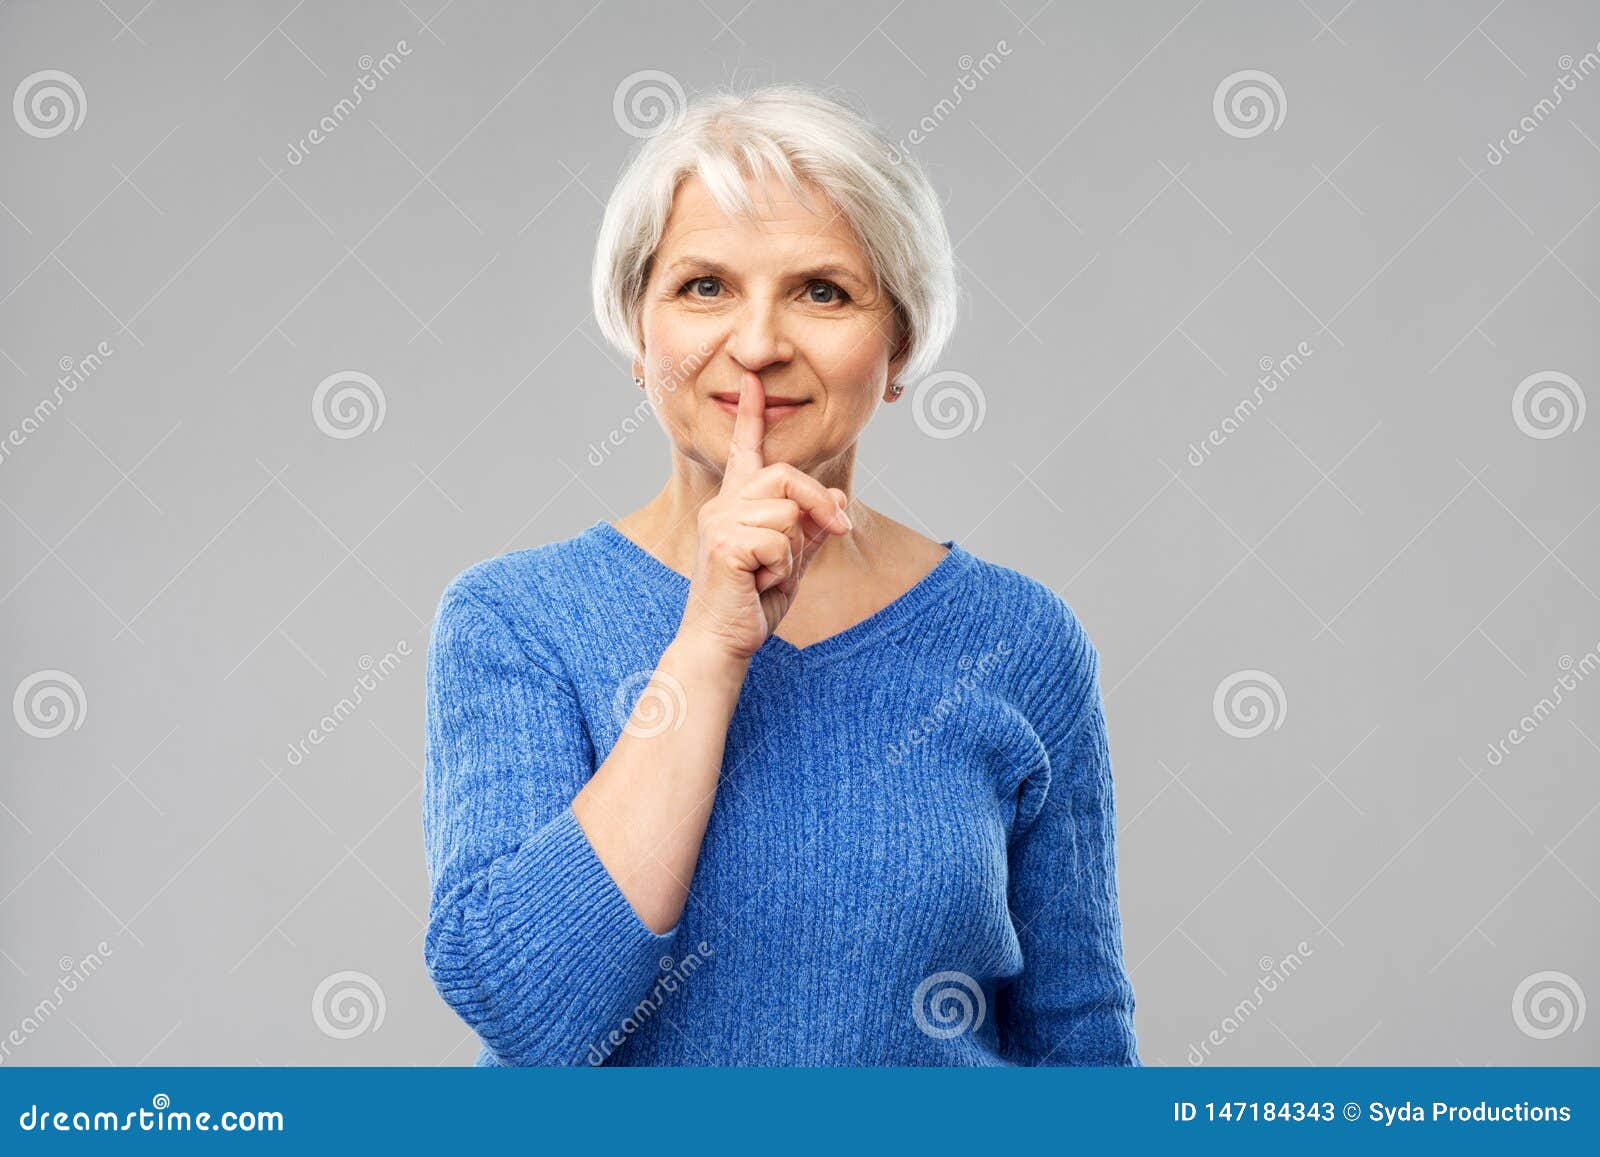 Senior Woman Making Shush Gesture In Kitchen Stock Image 